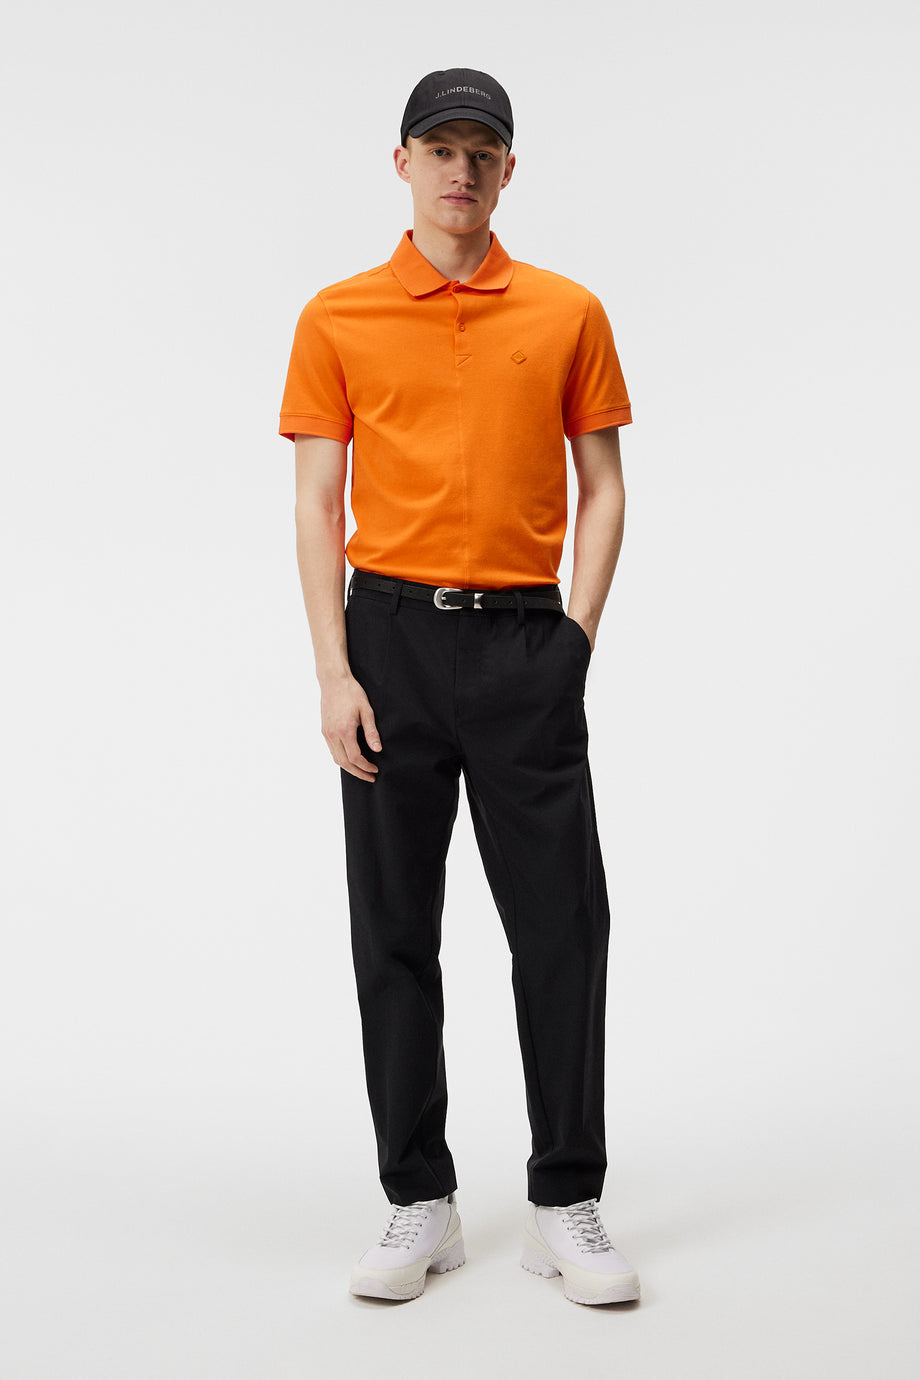 Rubi Slim Polo Shirt / Russet Orange